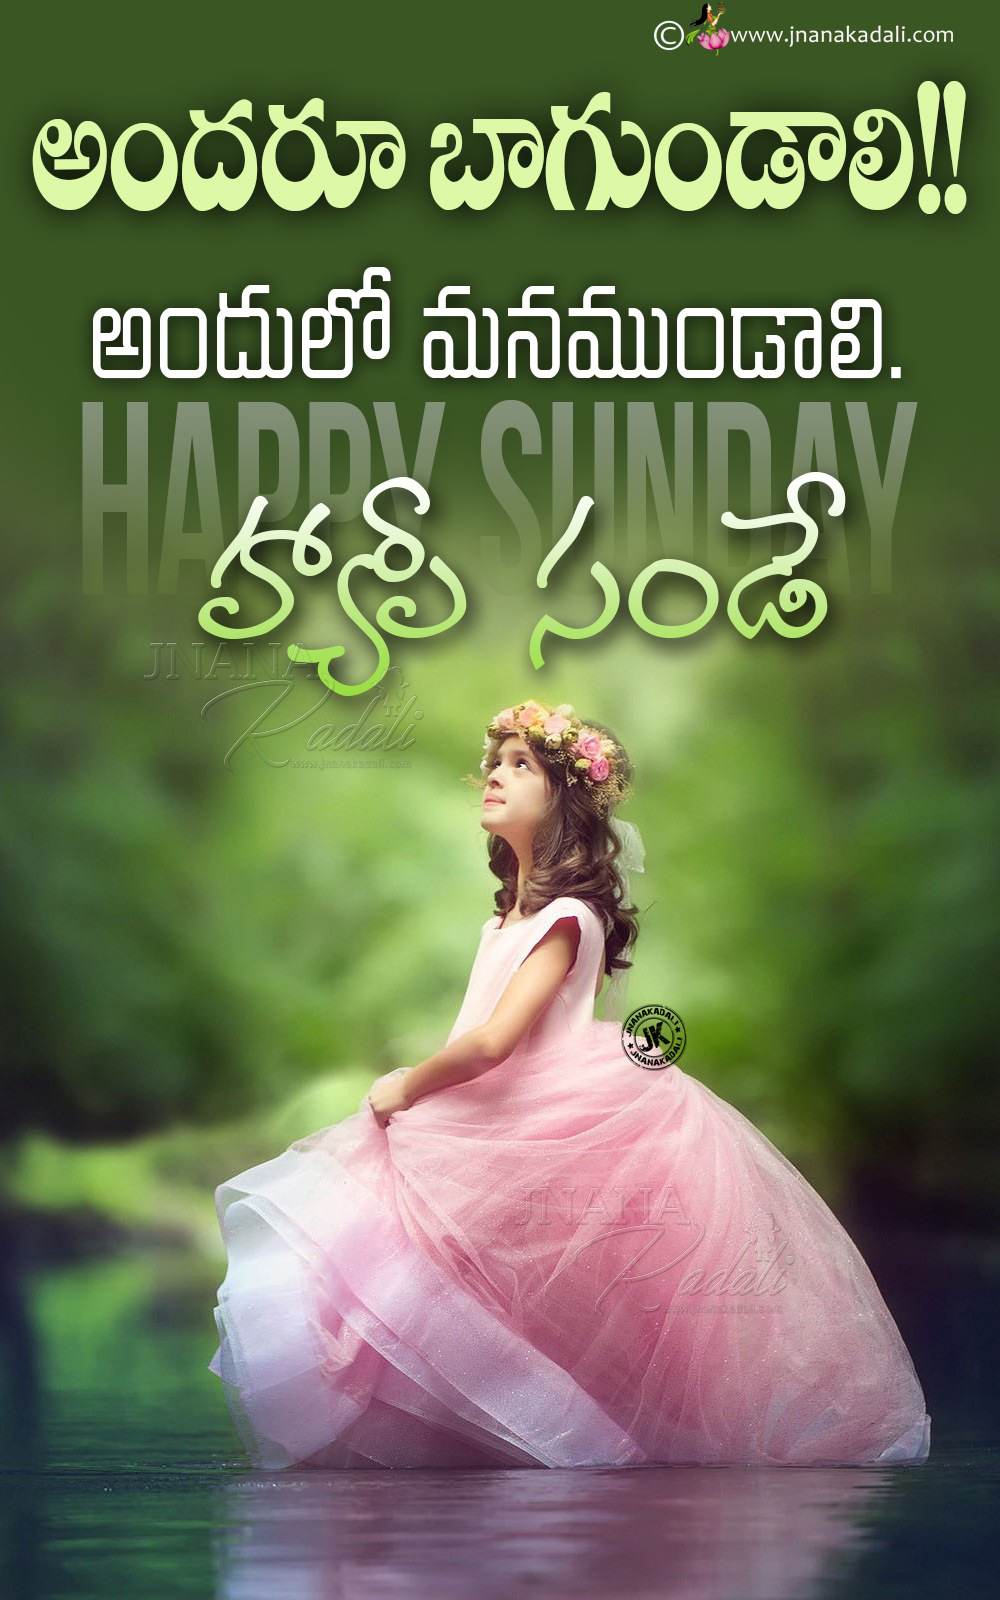 Happy Sunday Quotes in Telugu-Telugu Good Morning Quotes 